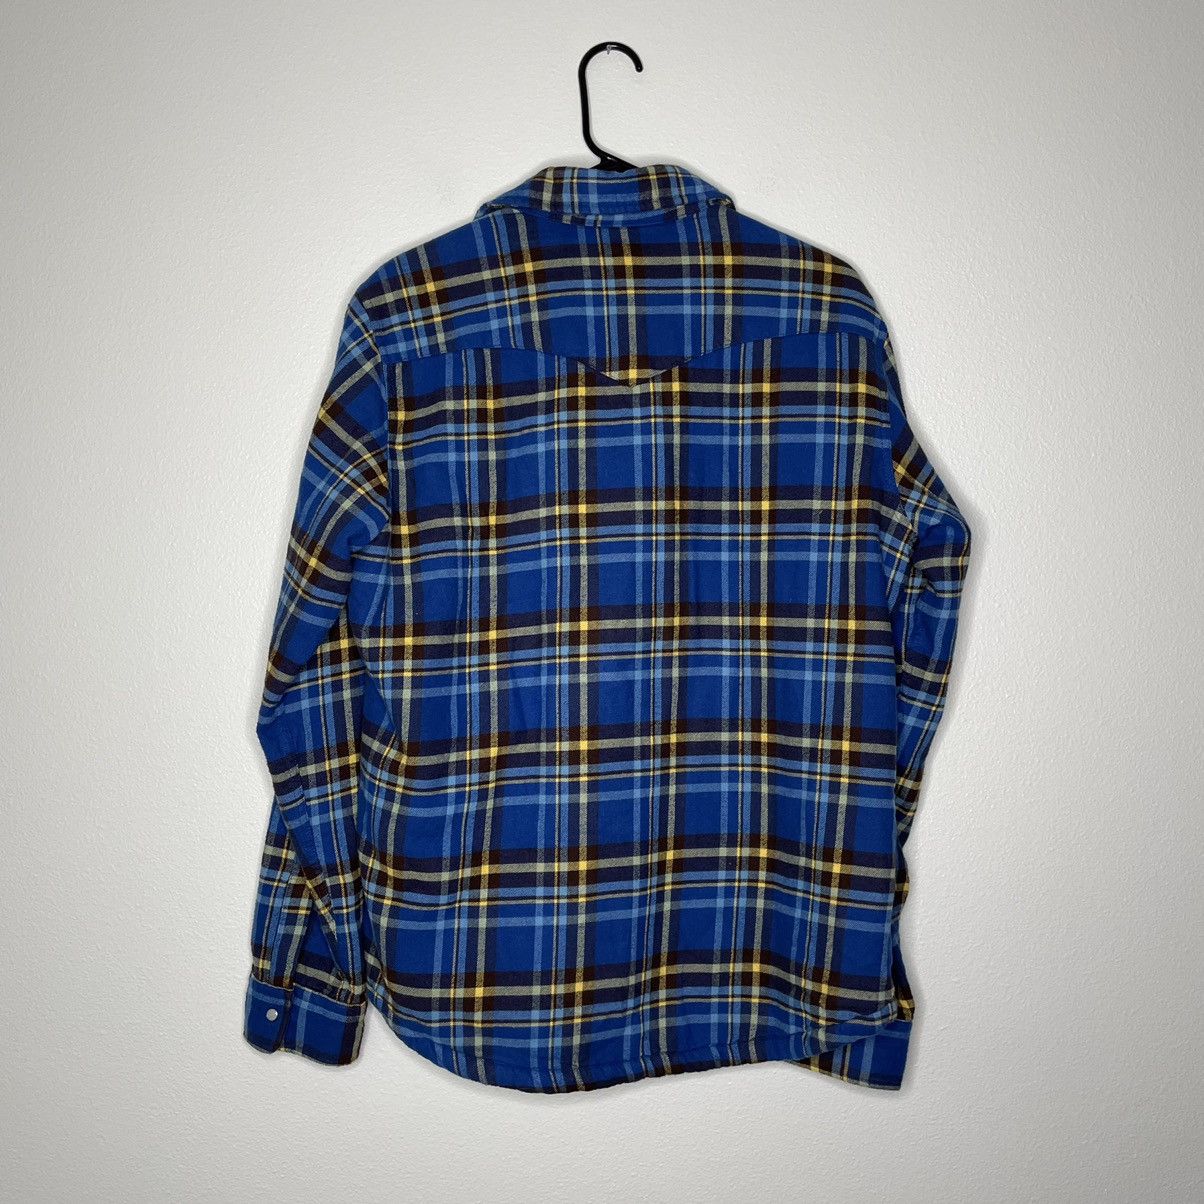 Uniqlo Uniqlo Sherpa lined flannel jacket Size US M / EU 48-50 / 2 - 6 Thumbnail